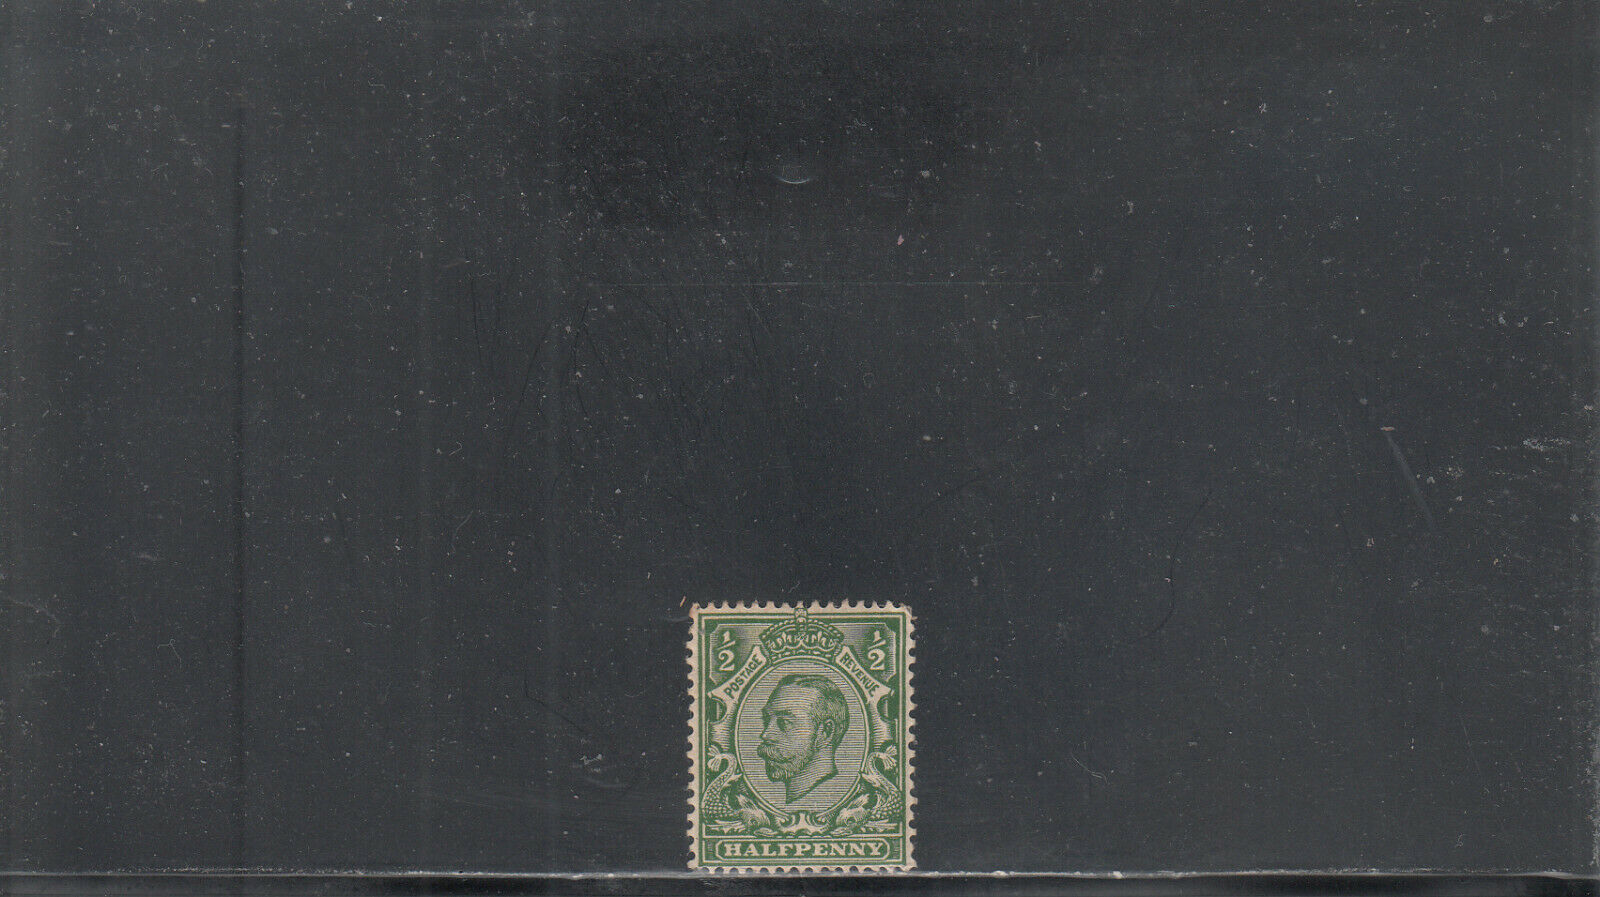 Great Britain *153 Mint 2019 Scott Catalogue Value $10.00